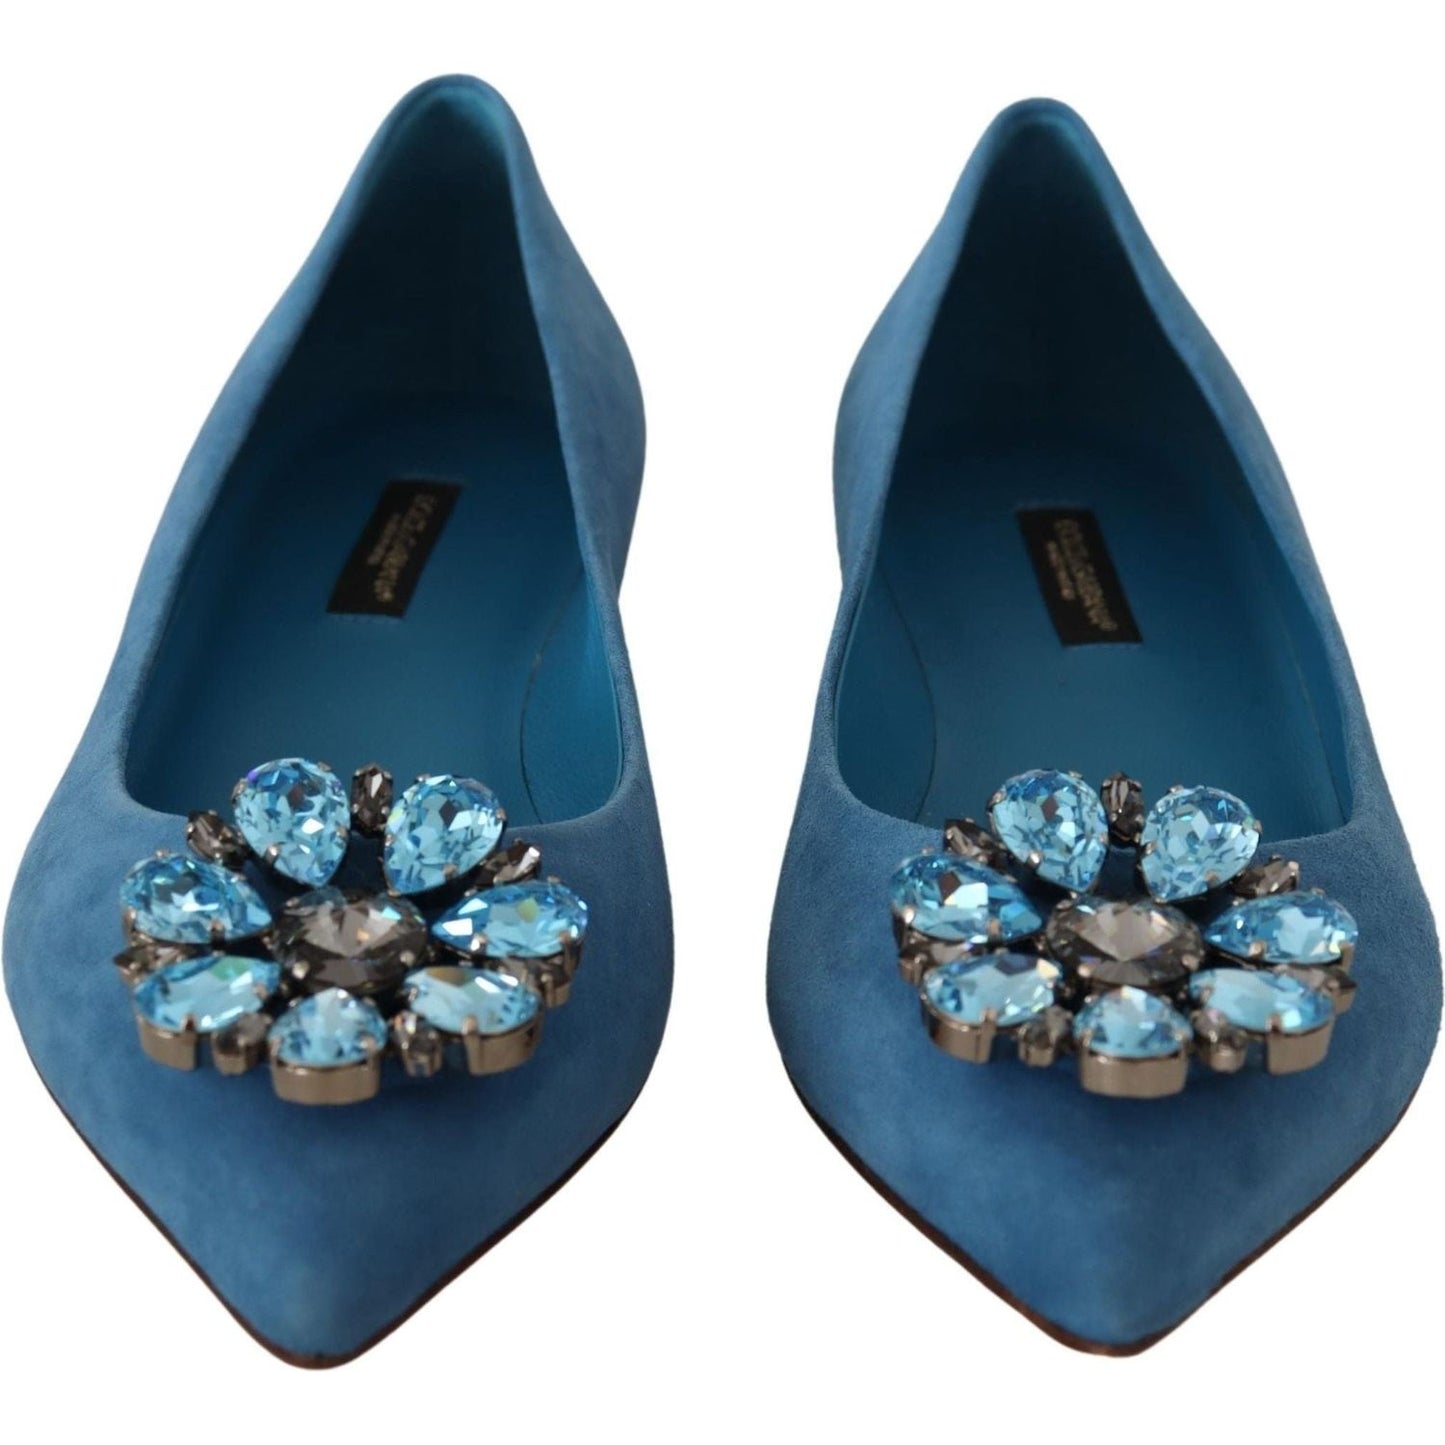 Dolce & Gabbana Elegant Crystal-Embellished Suede Flats blue-suede-crystals-loafers-flats-shoes